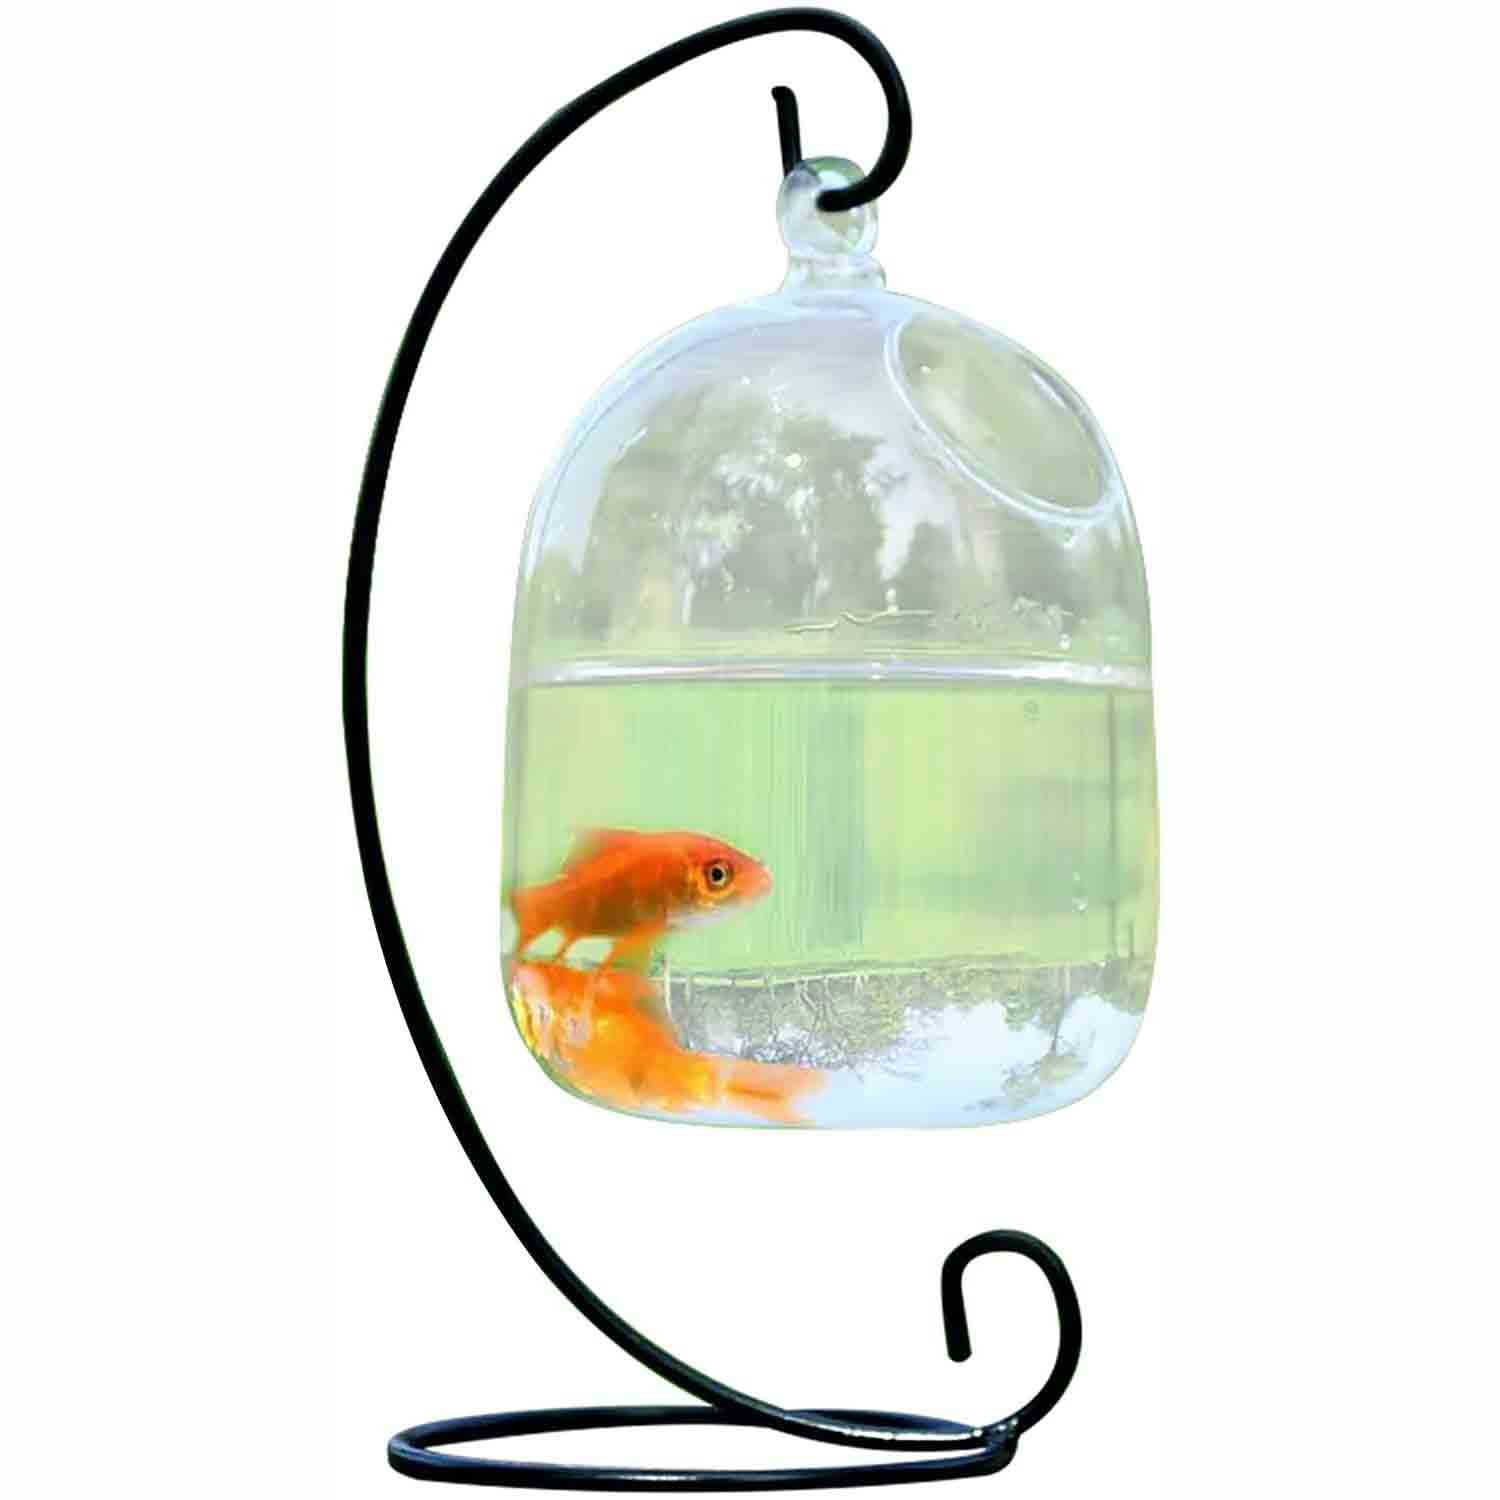 BOICXM Desktop Hanging Glass Fish Tank for Betta Fish Home Decor Mini Table Aquarium Glass Betta Fish Bowl Clear Fish Cylinder Bowl with Iron Stand 